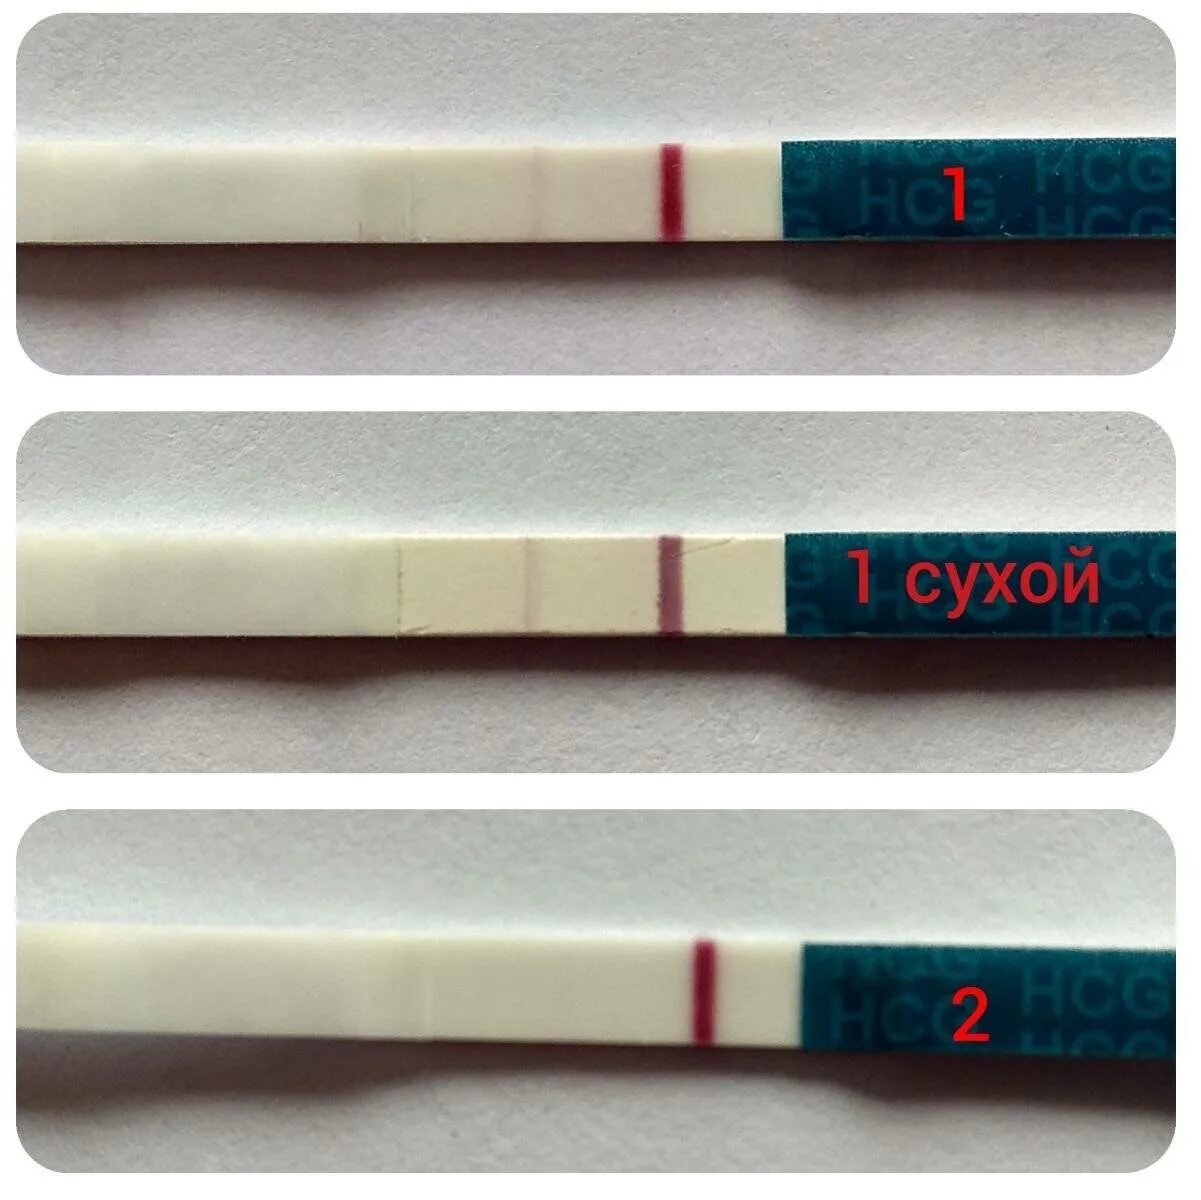 Реагент тест на беременность. Тест фраутест с 2 тест полосками. Тест на беременность одна полоска вторая реагент. Тест на беременность HCG 2 полоски. Тест 2 20 году